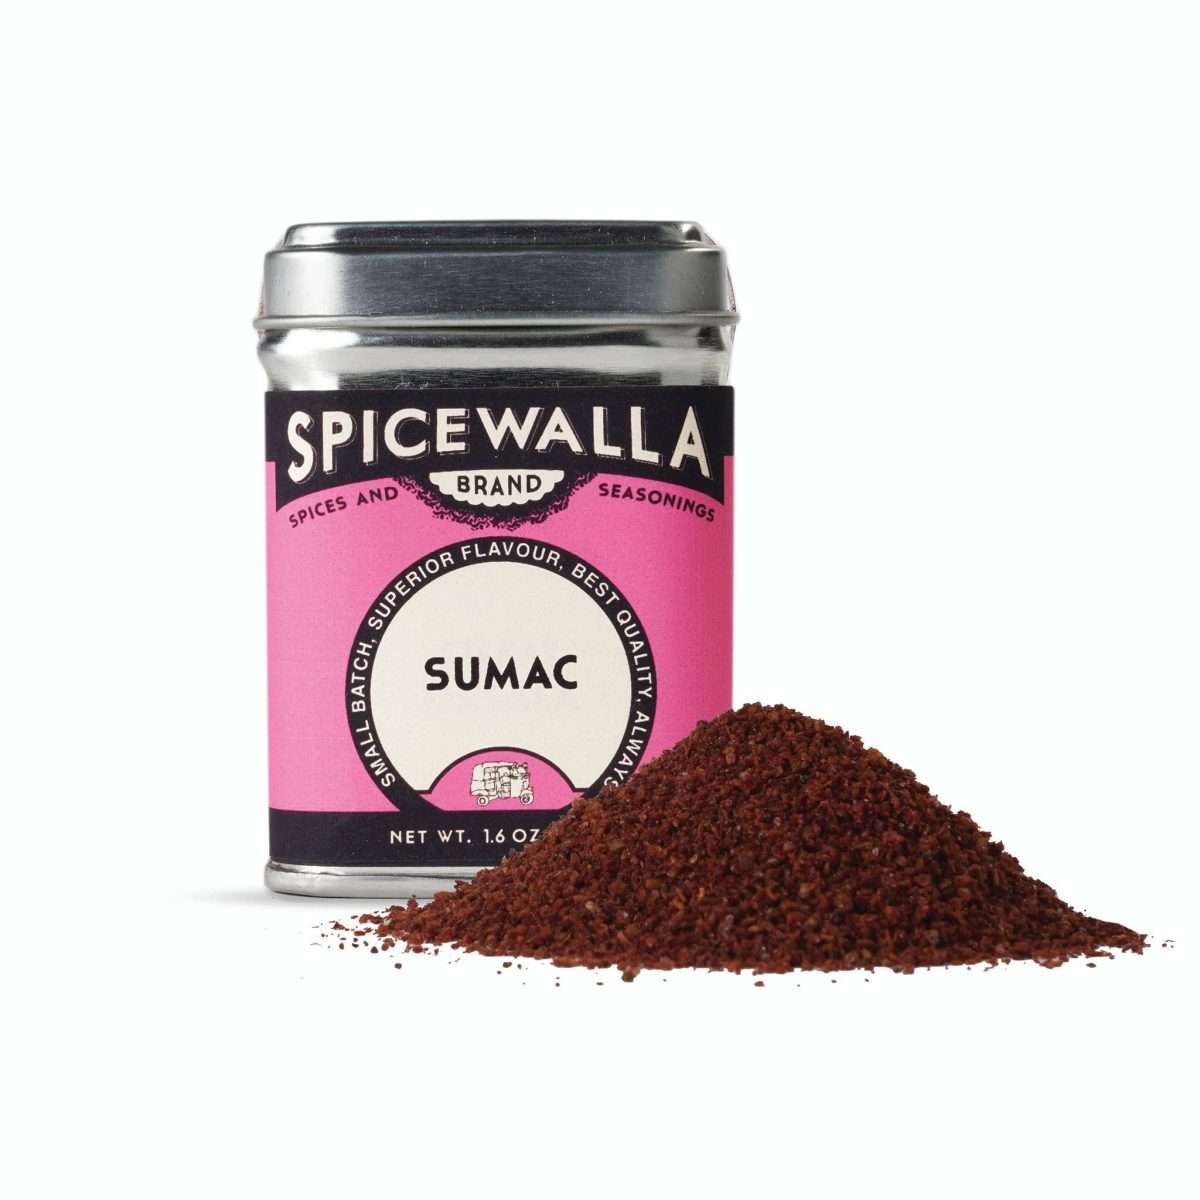 Spicewalla Sumac spice in a small tin